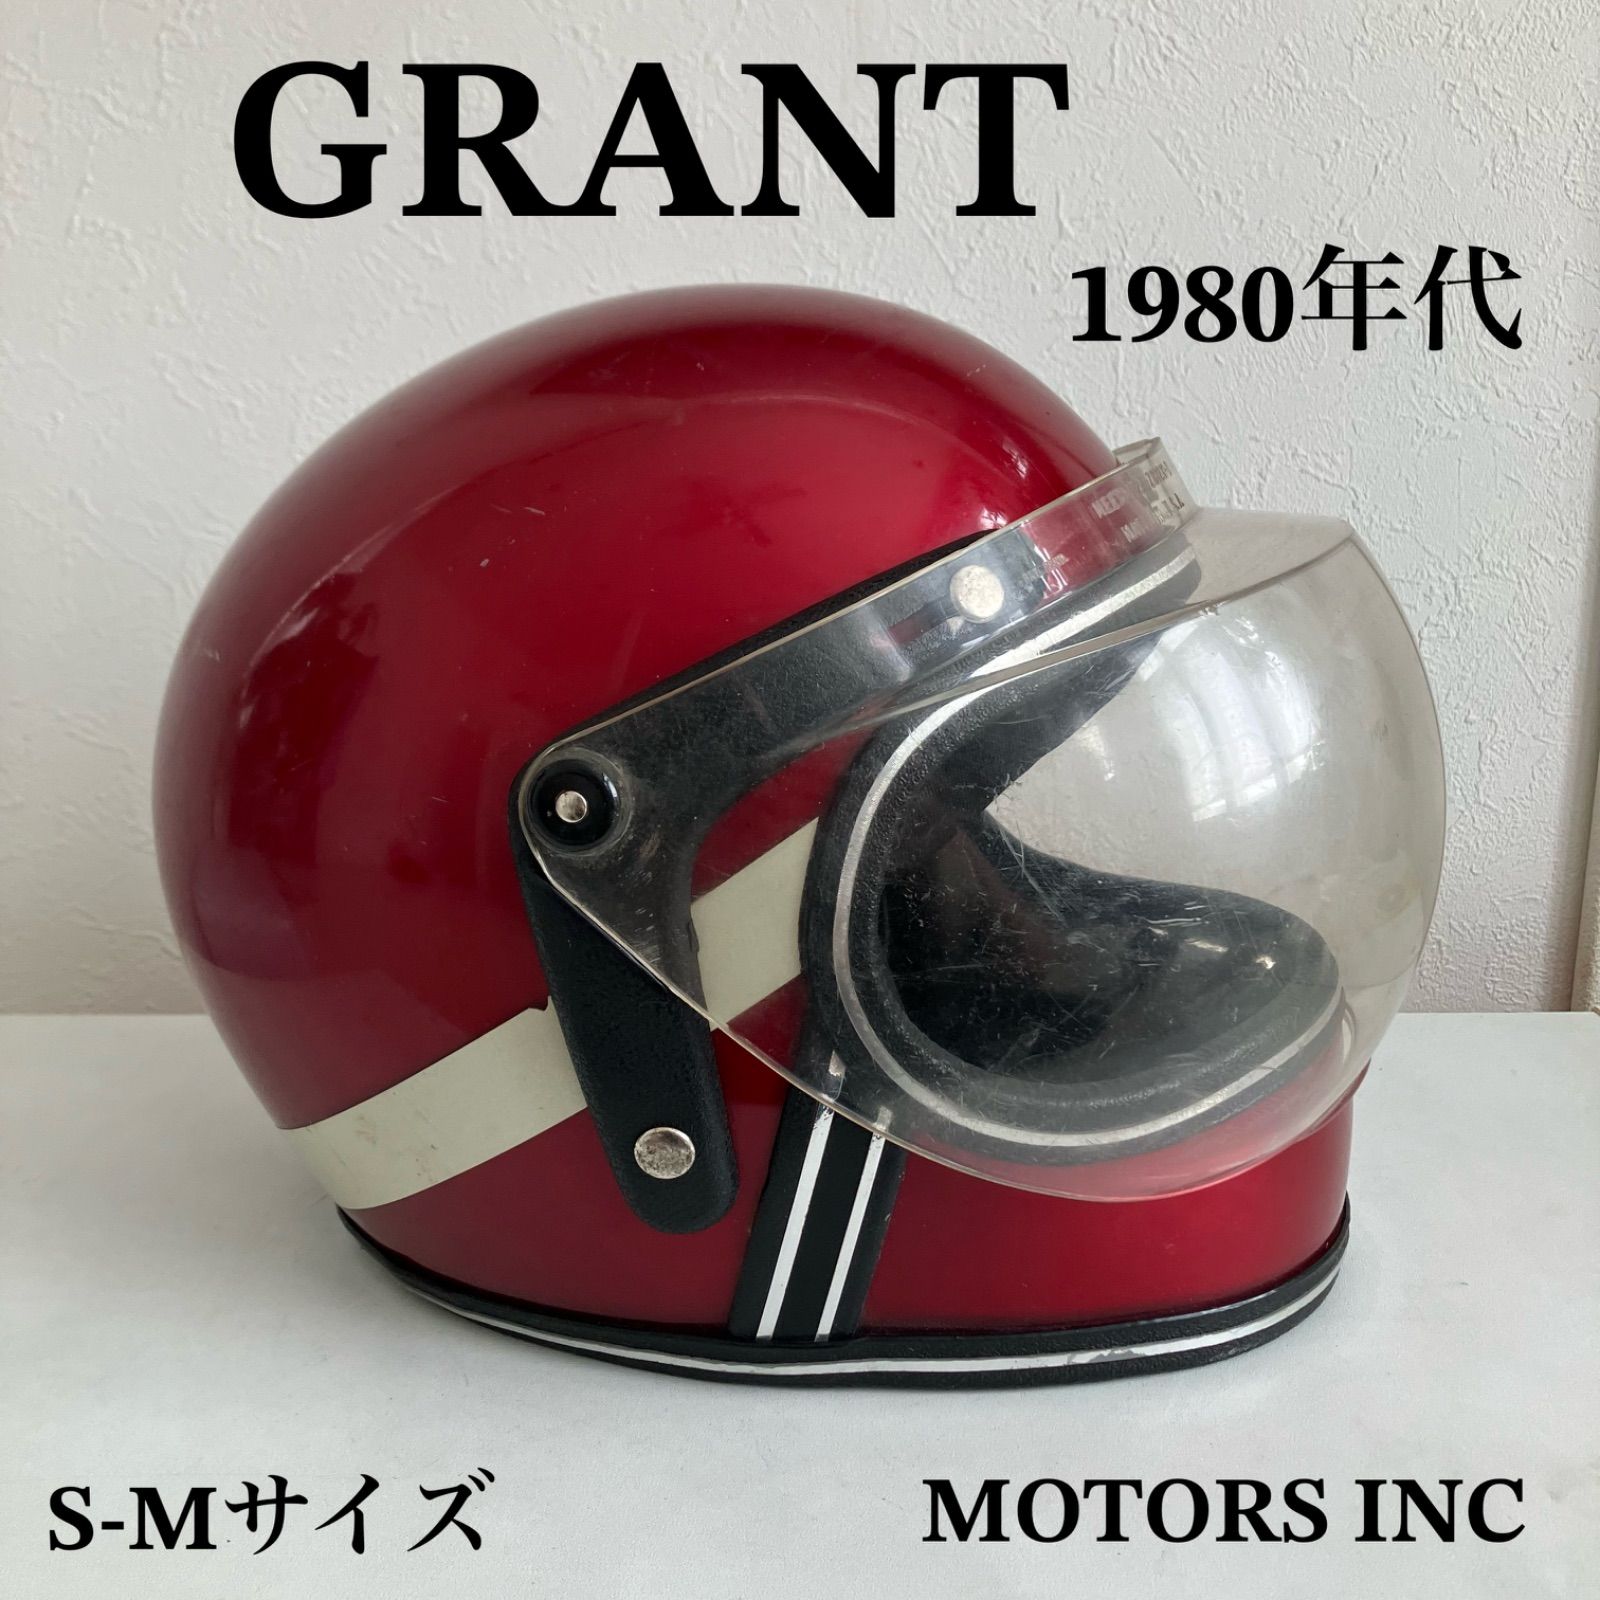 GRANT RG-9★S-Mサイズ ビンテージヘルメット 80年代 赤 希少 旧車 ハーレー フルフェイス USA アメリカ バイク バイカー  MOTORS INC